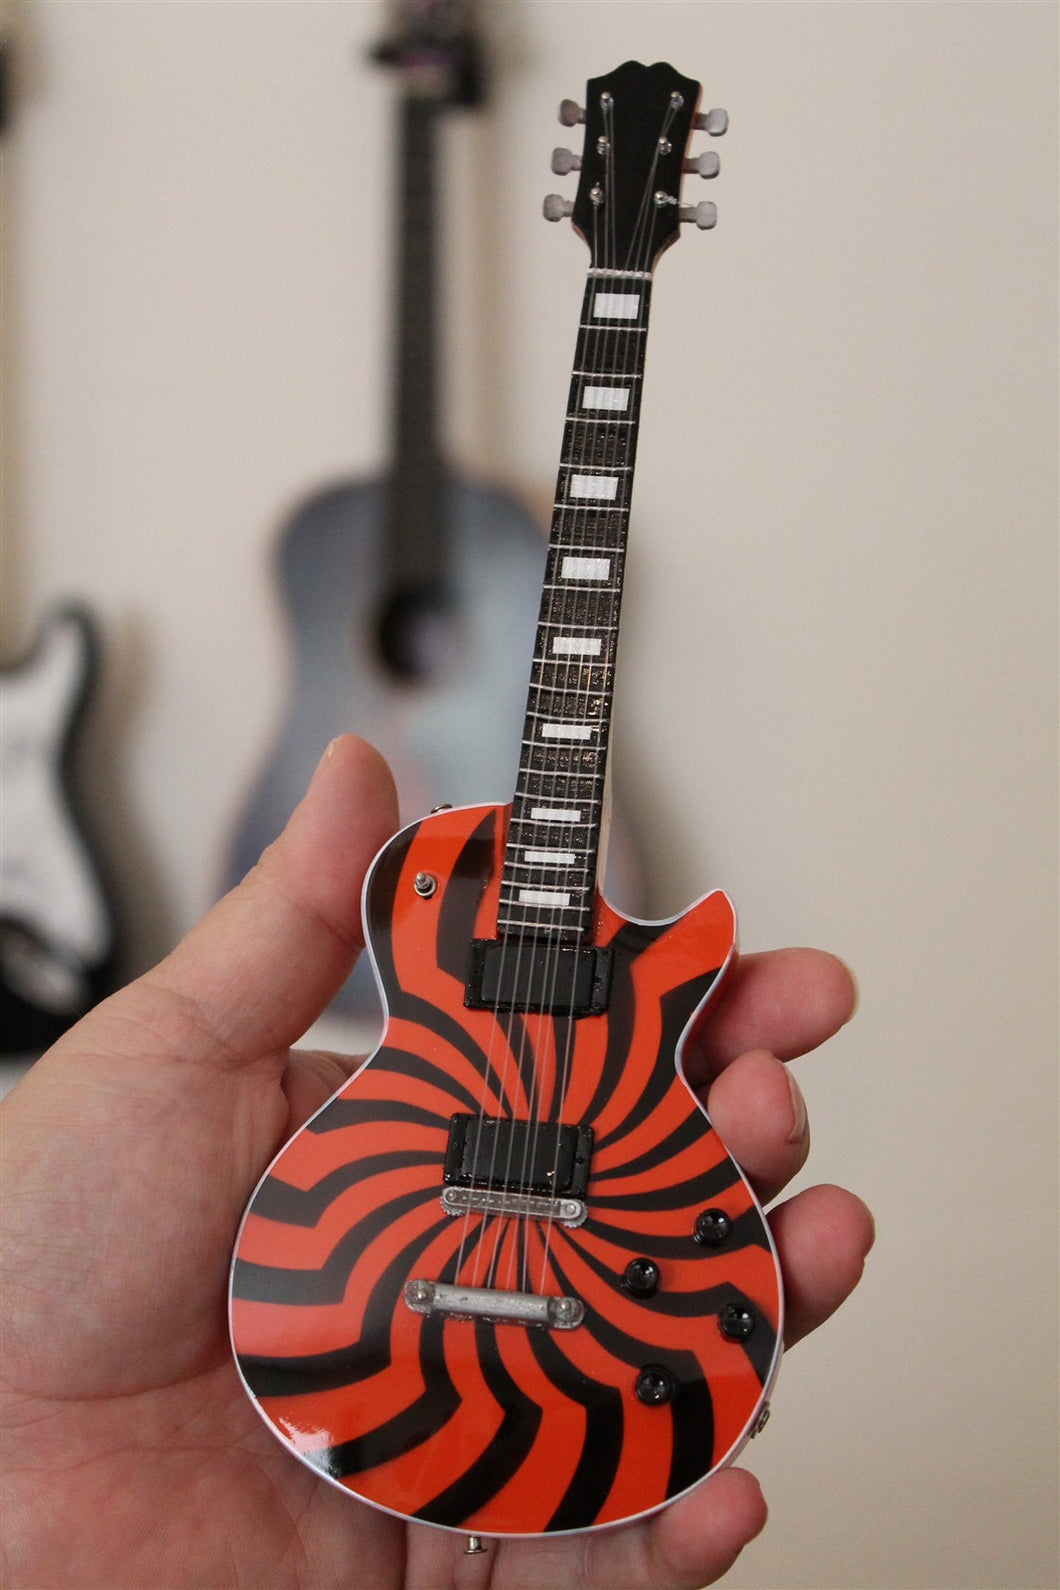 ZAKK WYLDE Orange/Black Buzzsaw Custom 1:4 Scale Replica Guitar ~New~